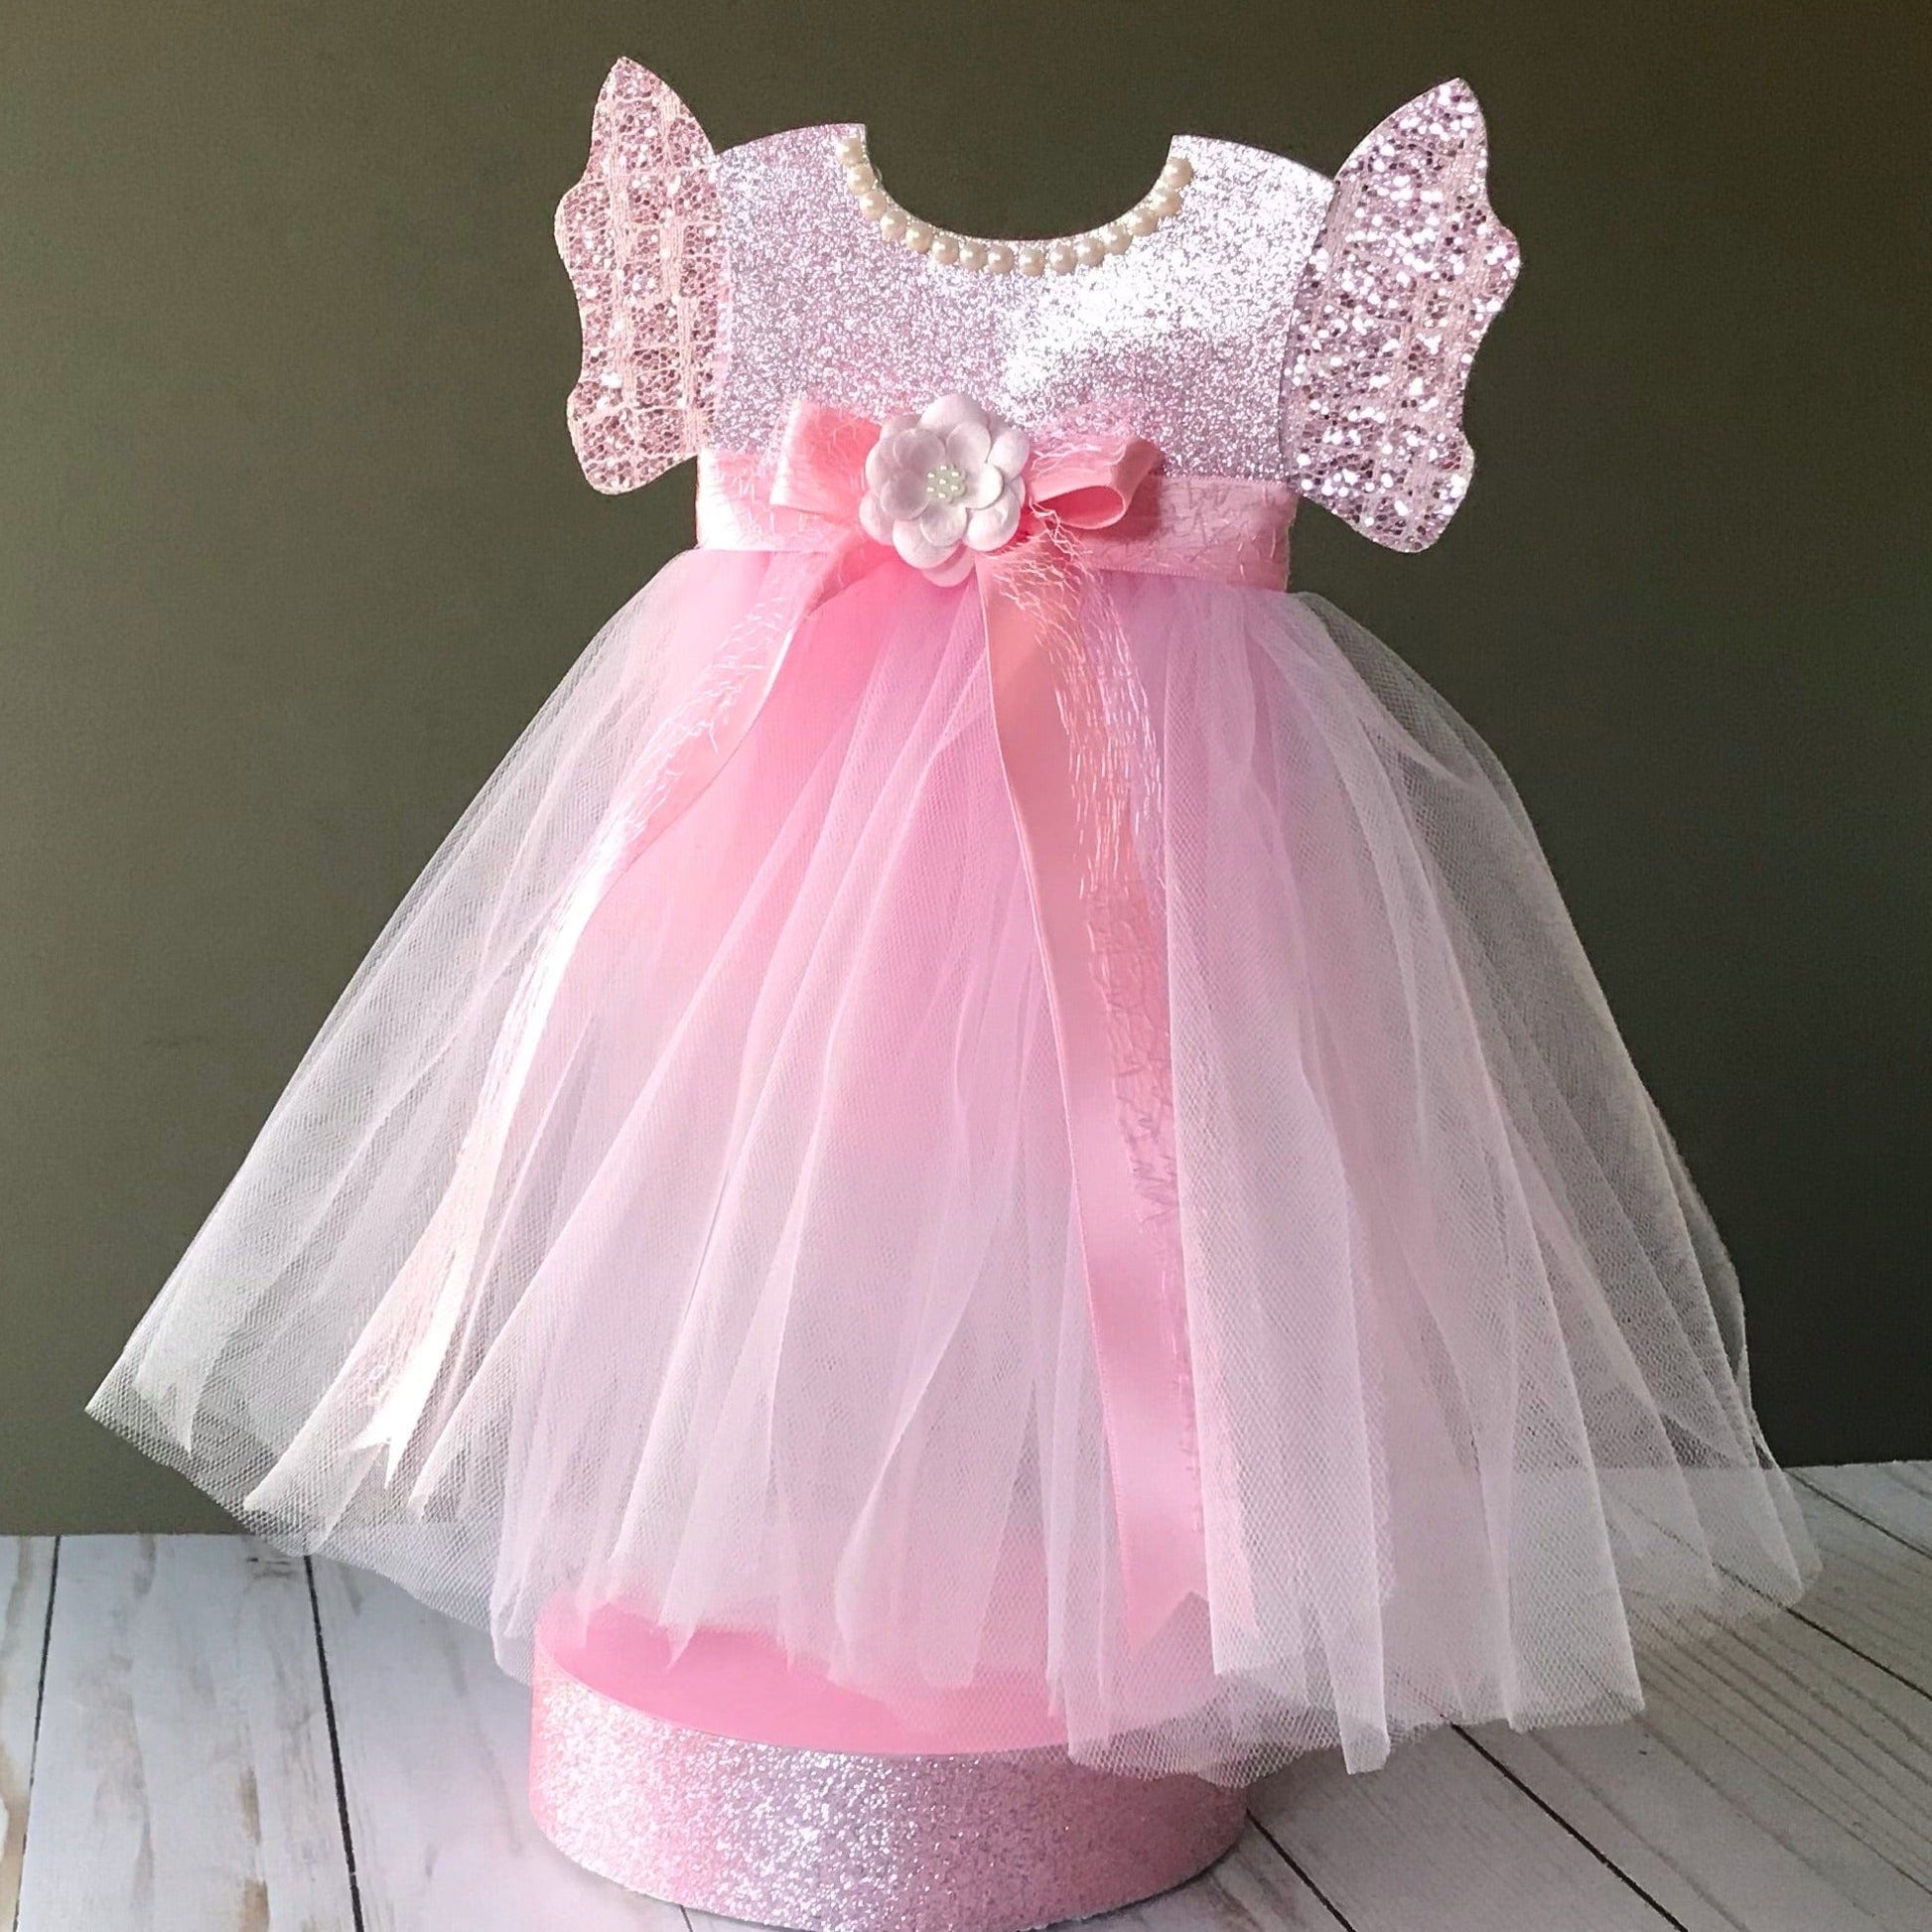 Adriana Ortiz Designs Tutu Dress Centerpiece Tutu dress pink centerpiece for baby shower, birthday party or baptism.